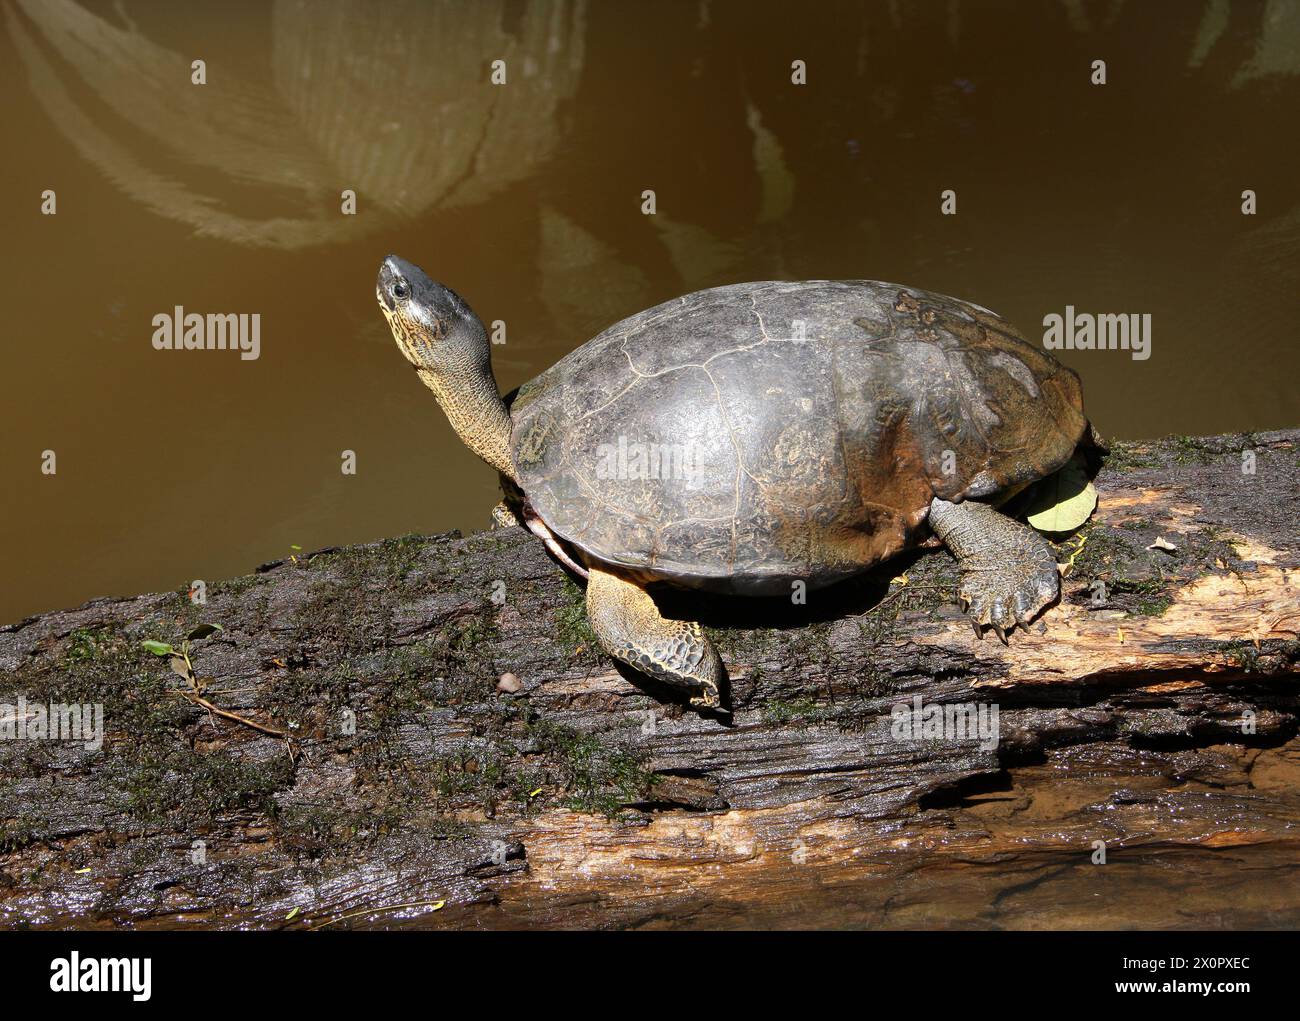 Black River Turtle or Black Wood Turtle, Rhinoclemmys funerea, Geoemydidae. Tortuguero, Costa Rica. Stock Photo